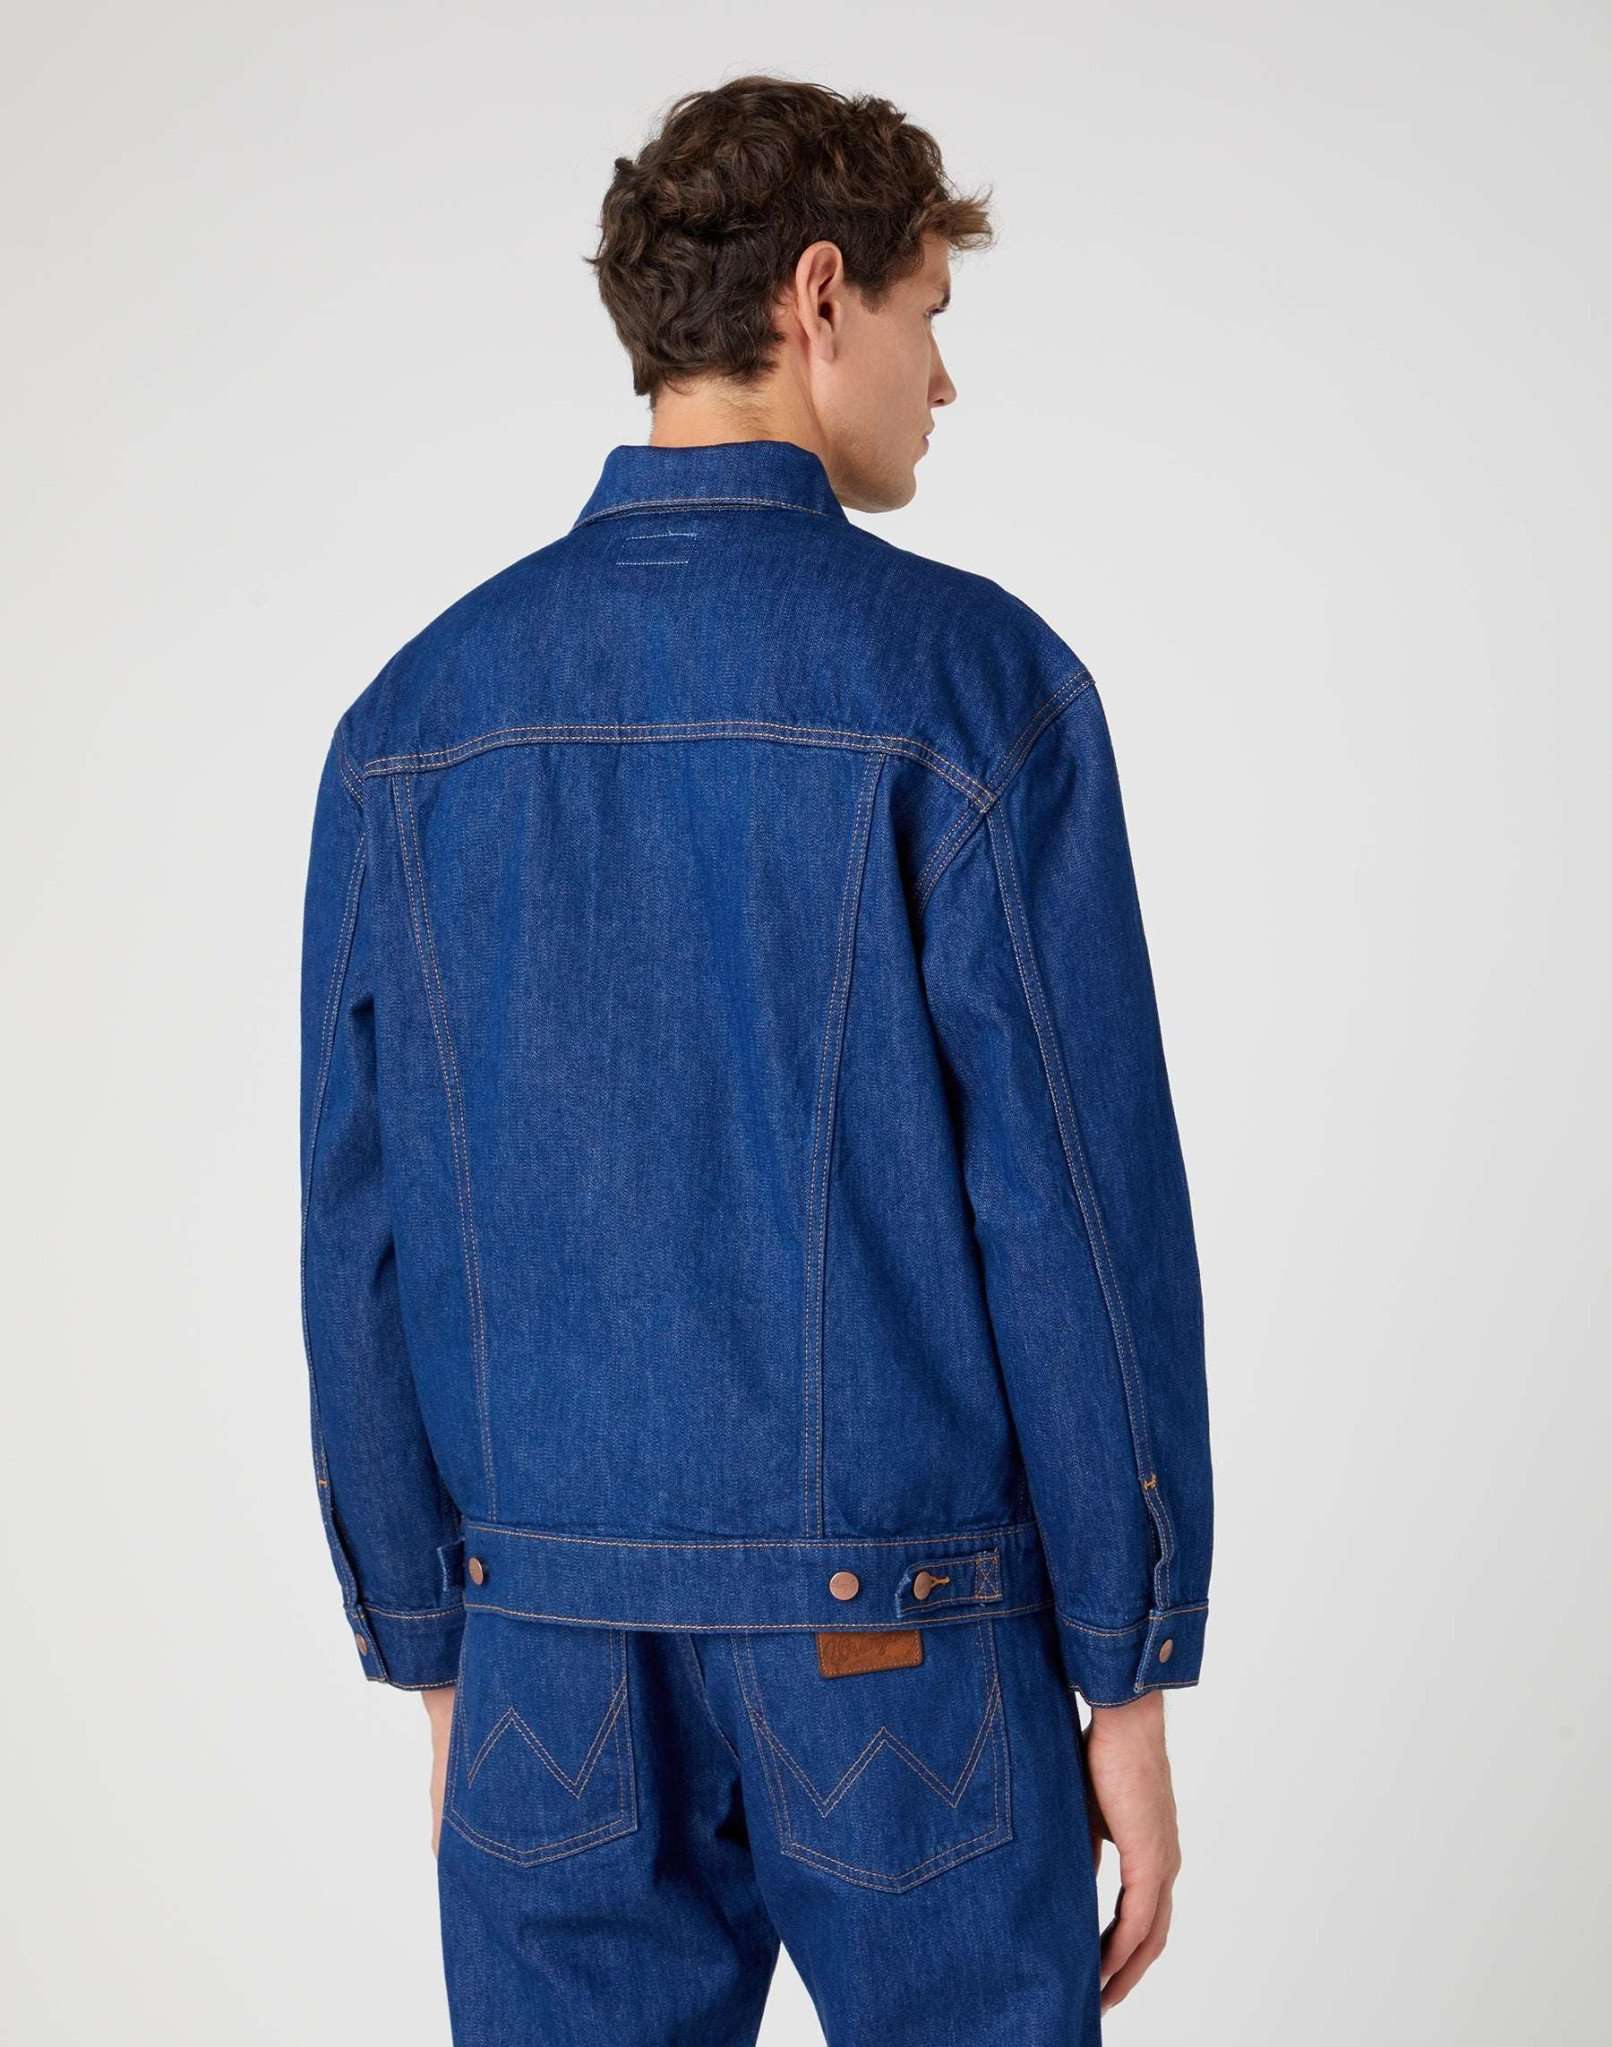 Anti Fit Jacket in Wrangler Blue Jacken Wrangler   